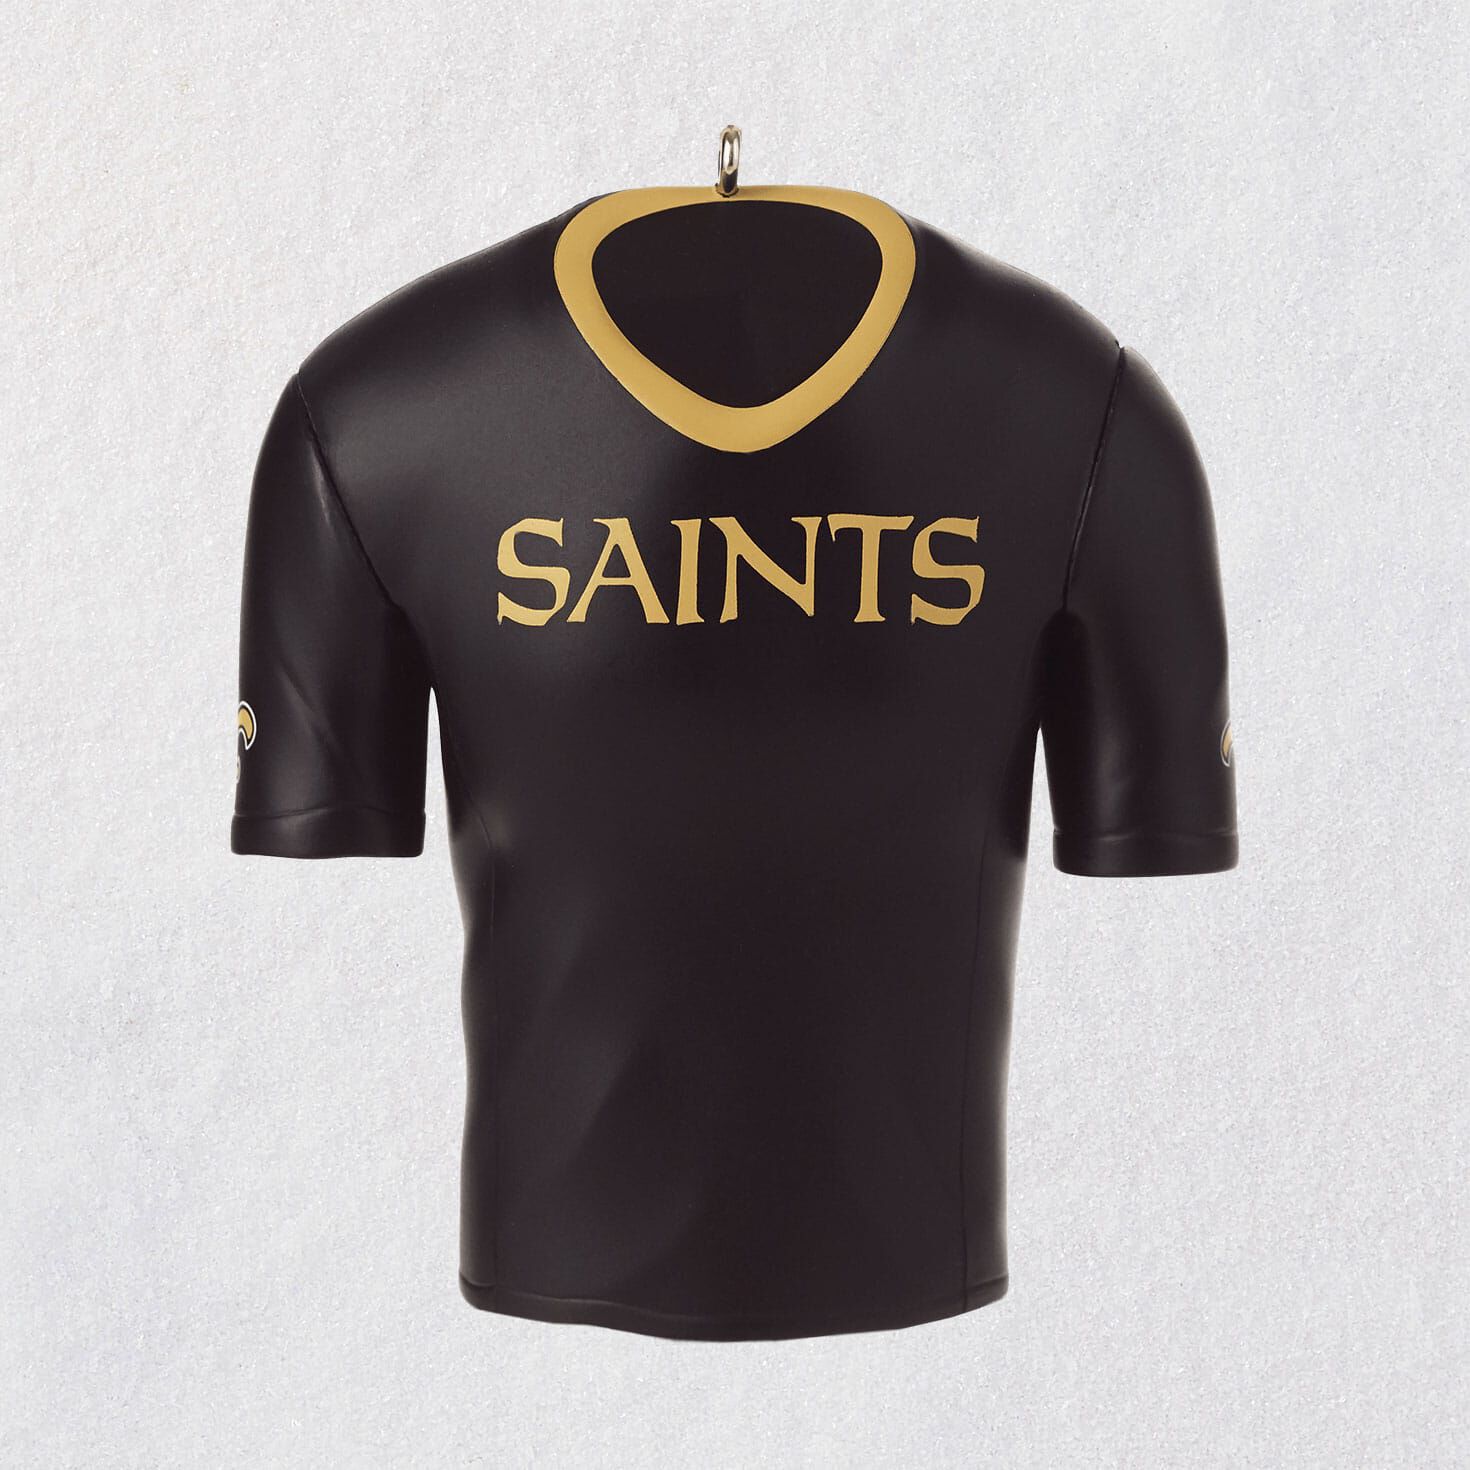 new orleans saints jersey near me